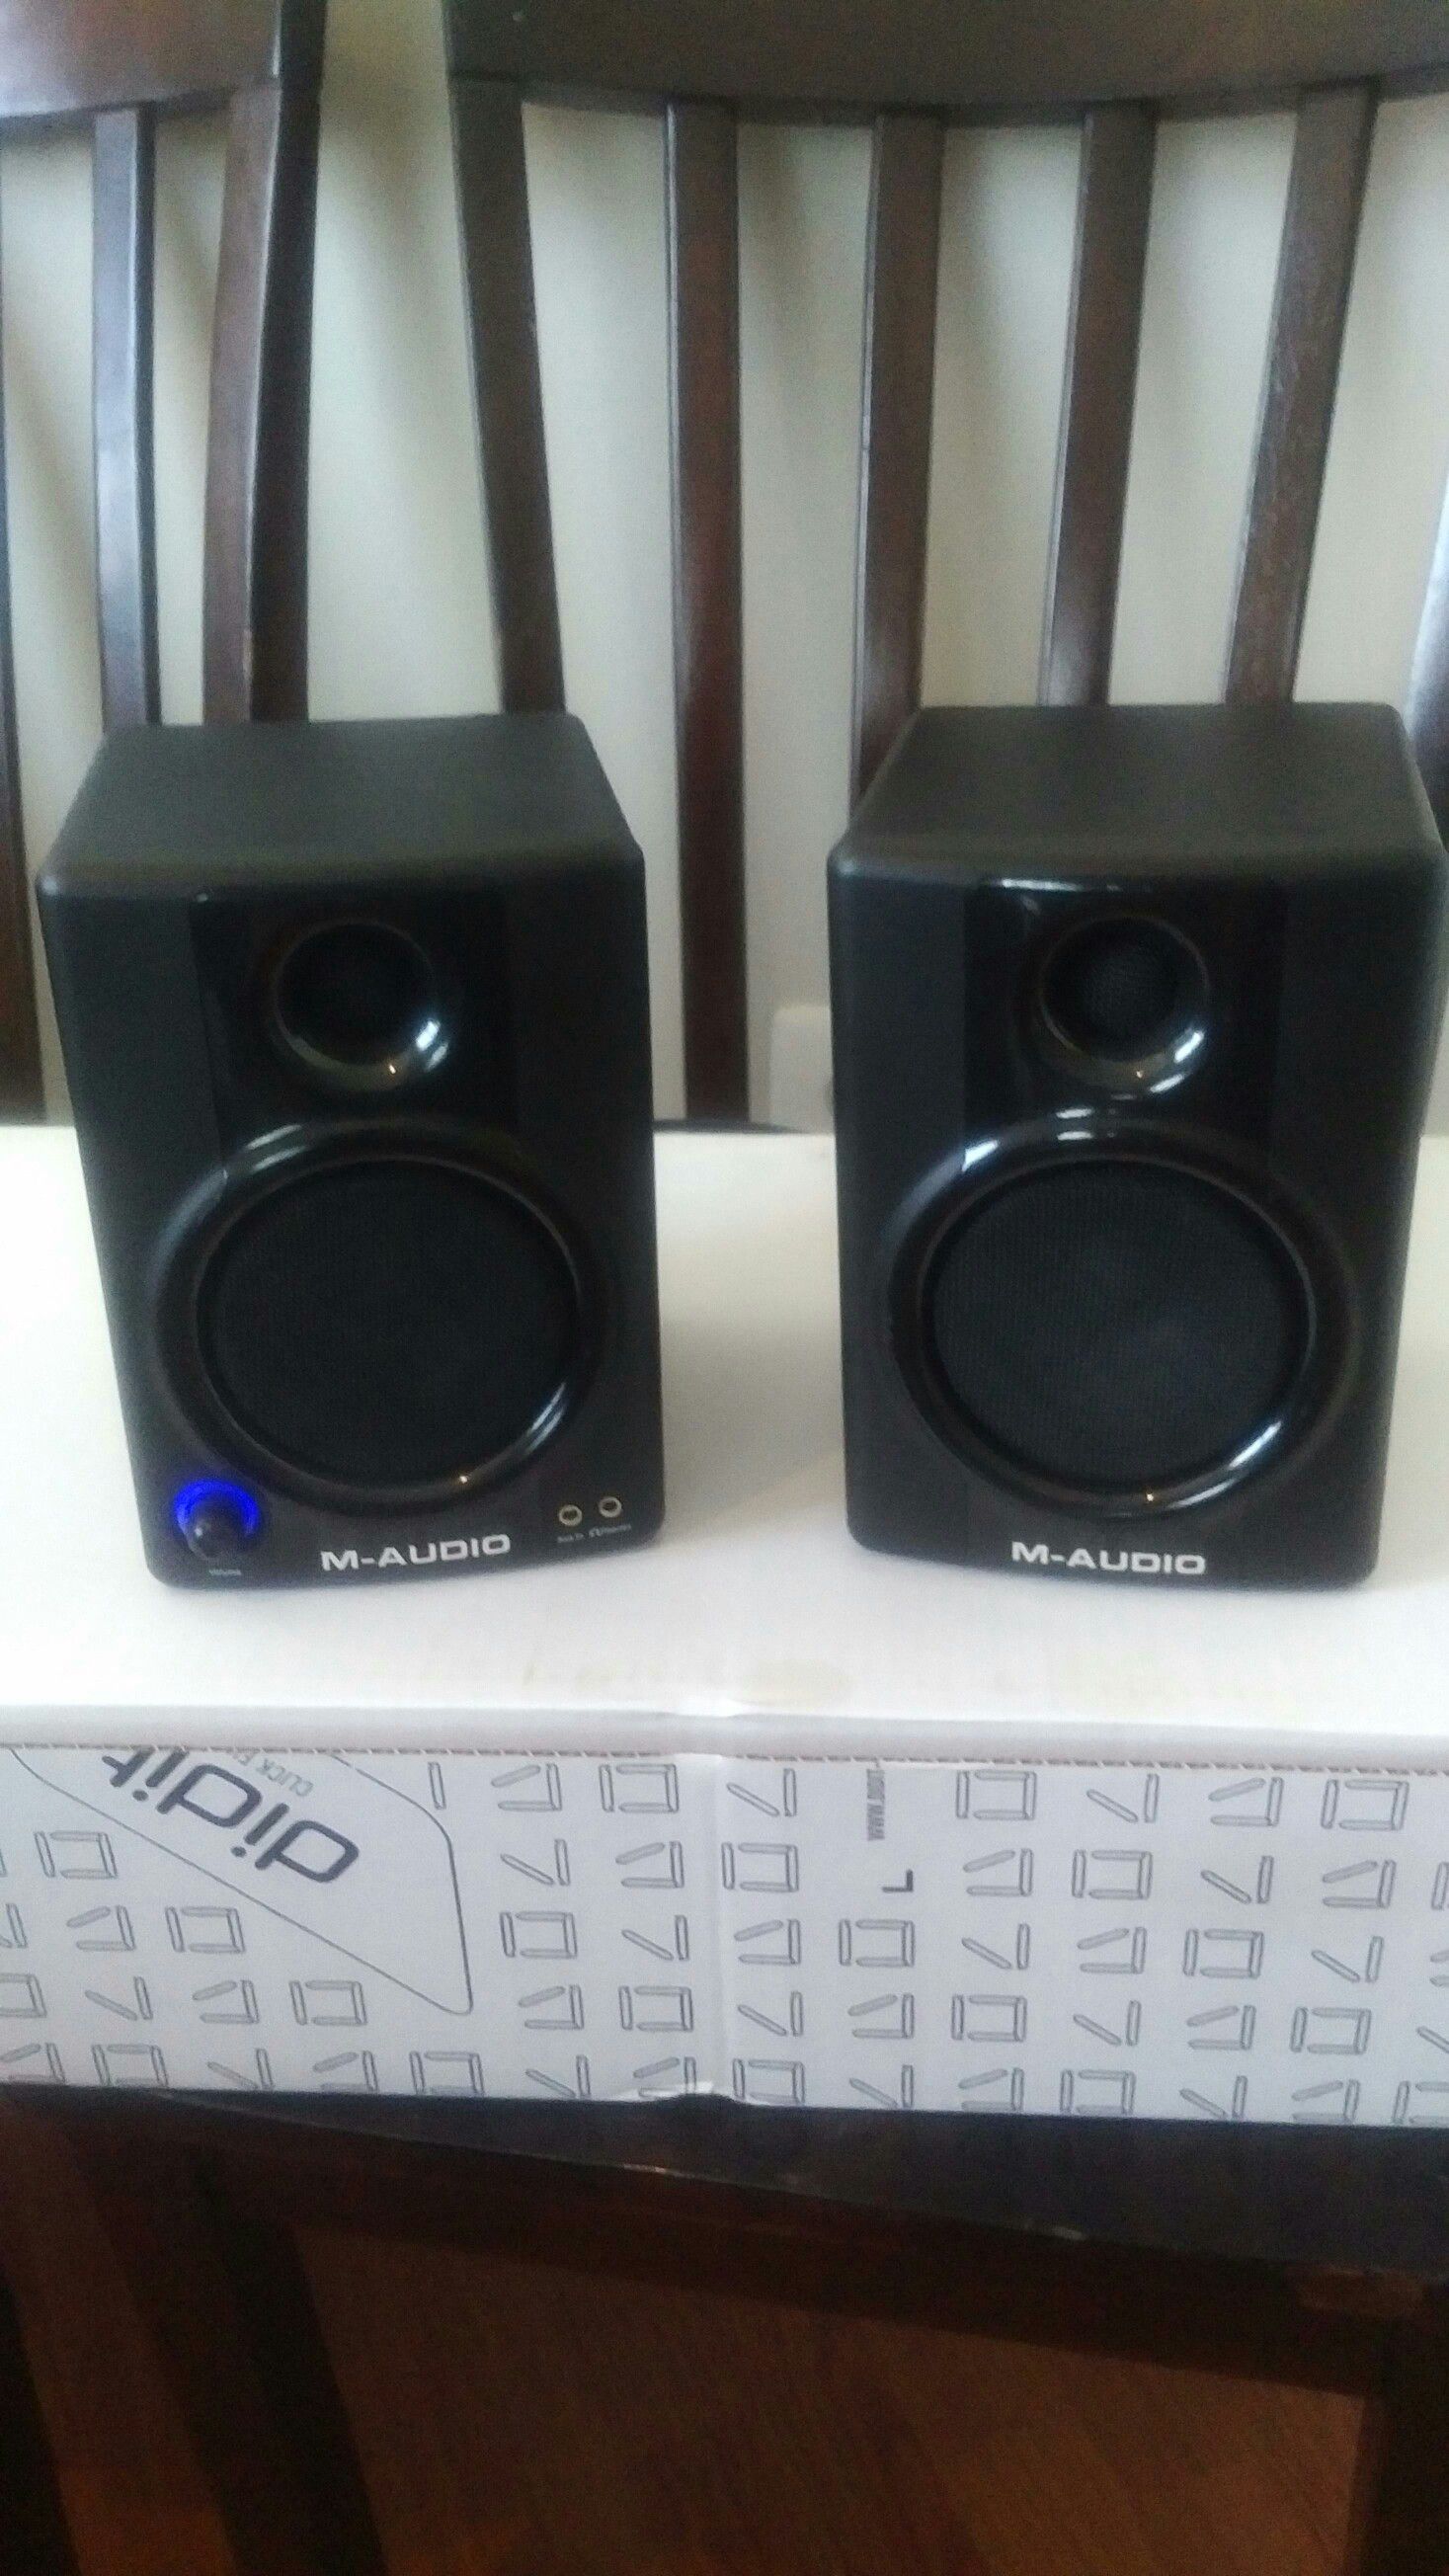 M-AUDIO Studiophile AV30 Professional Reference Studio Speakers